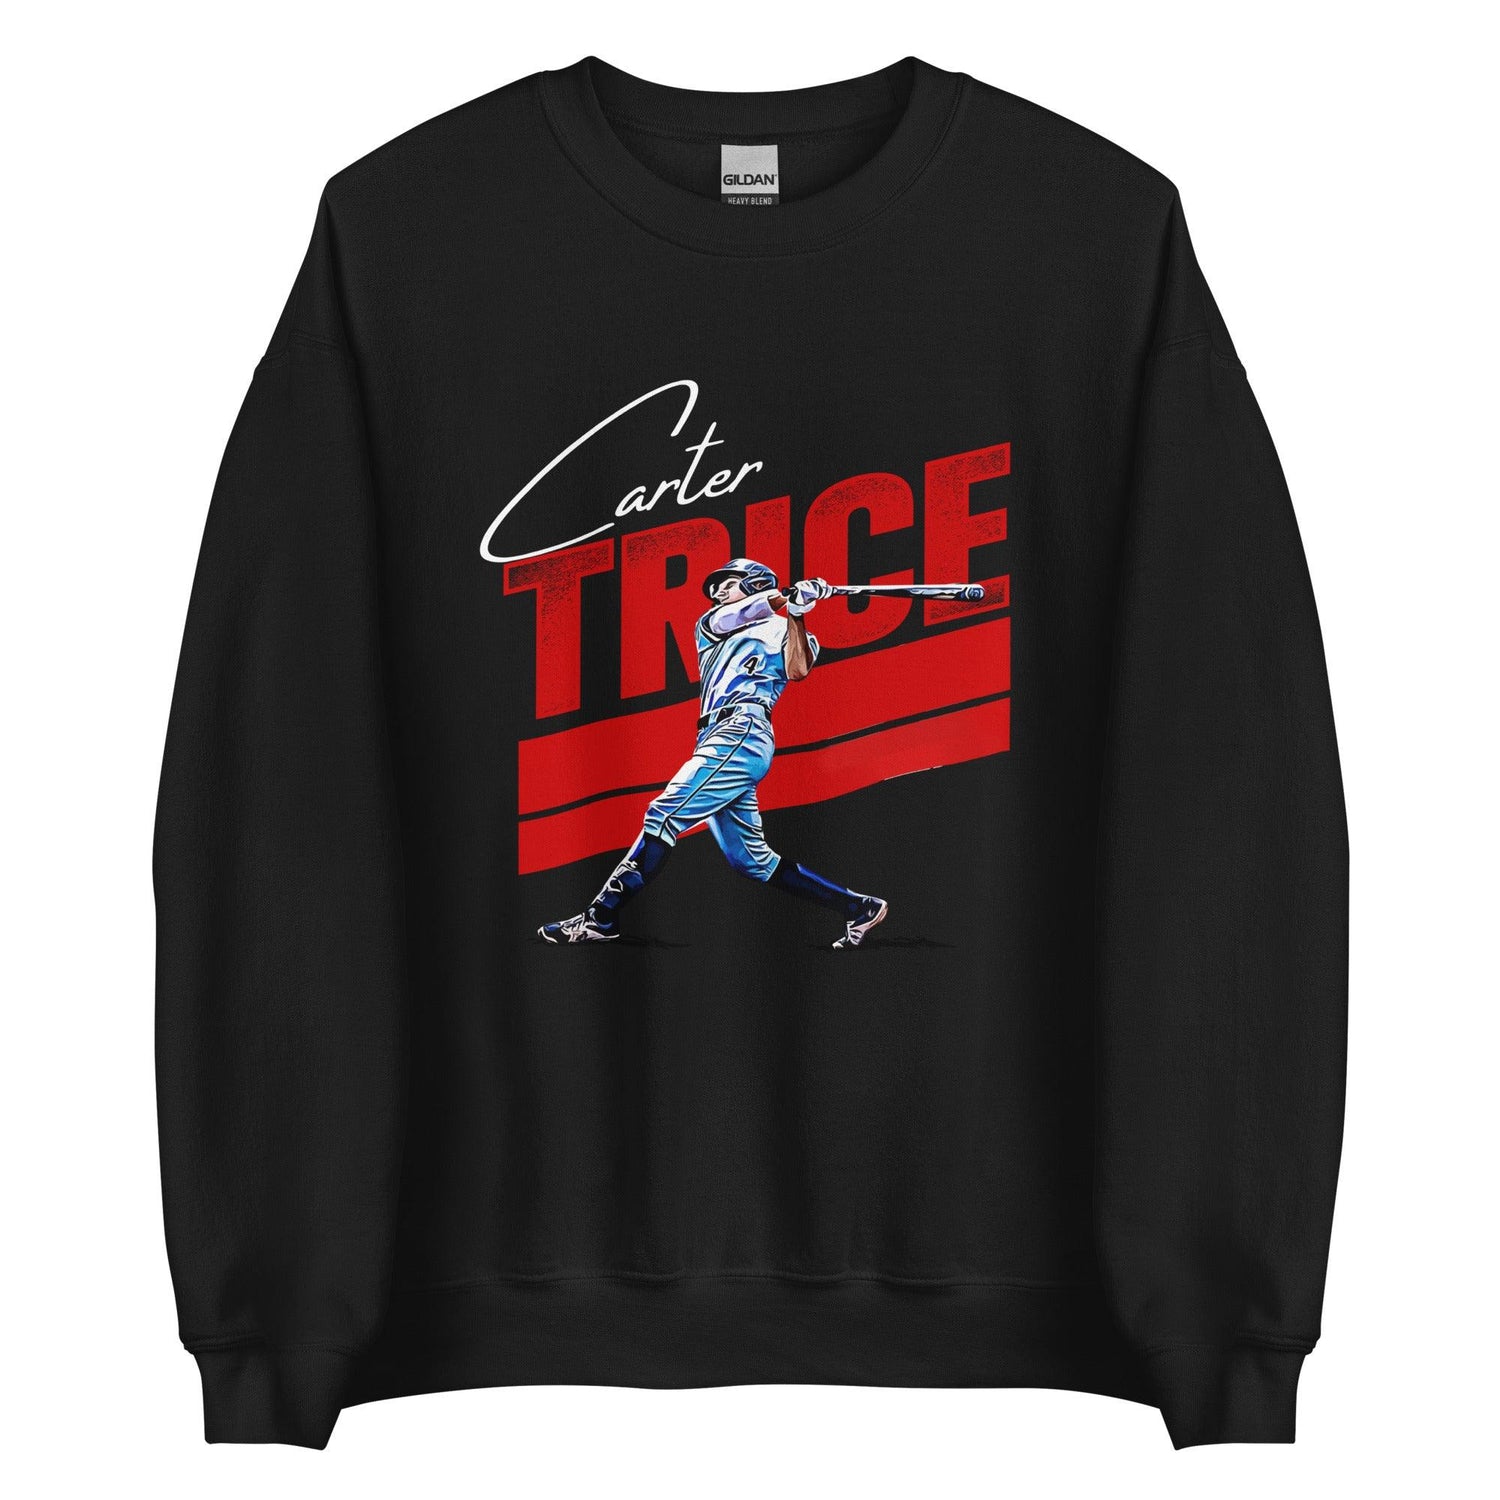 Carter Trice “Essential” Sweatshirt - Fan Arch